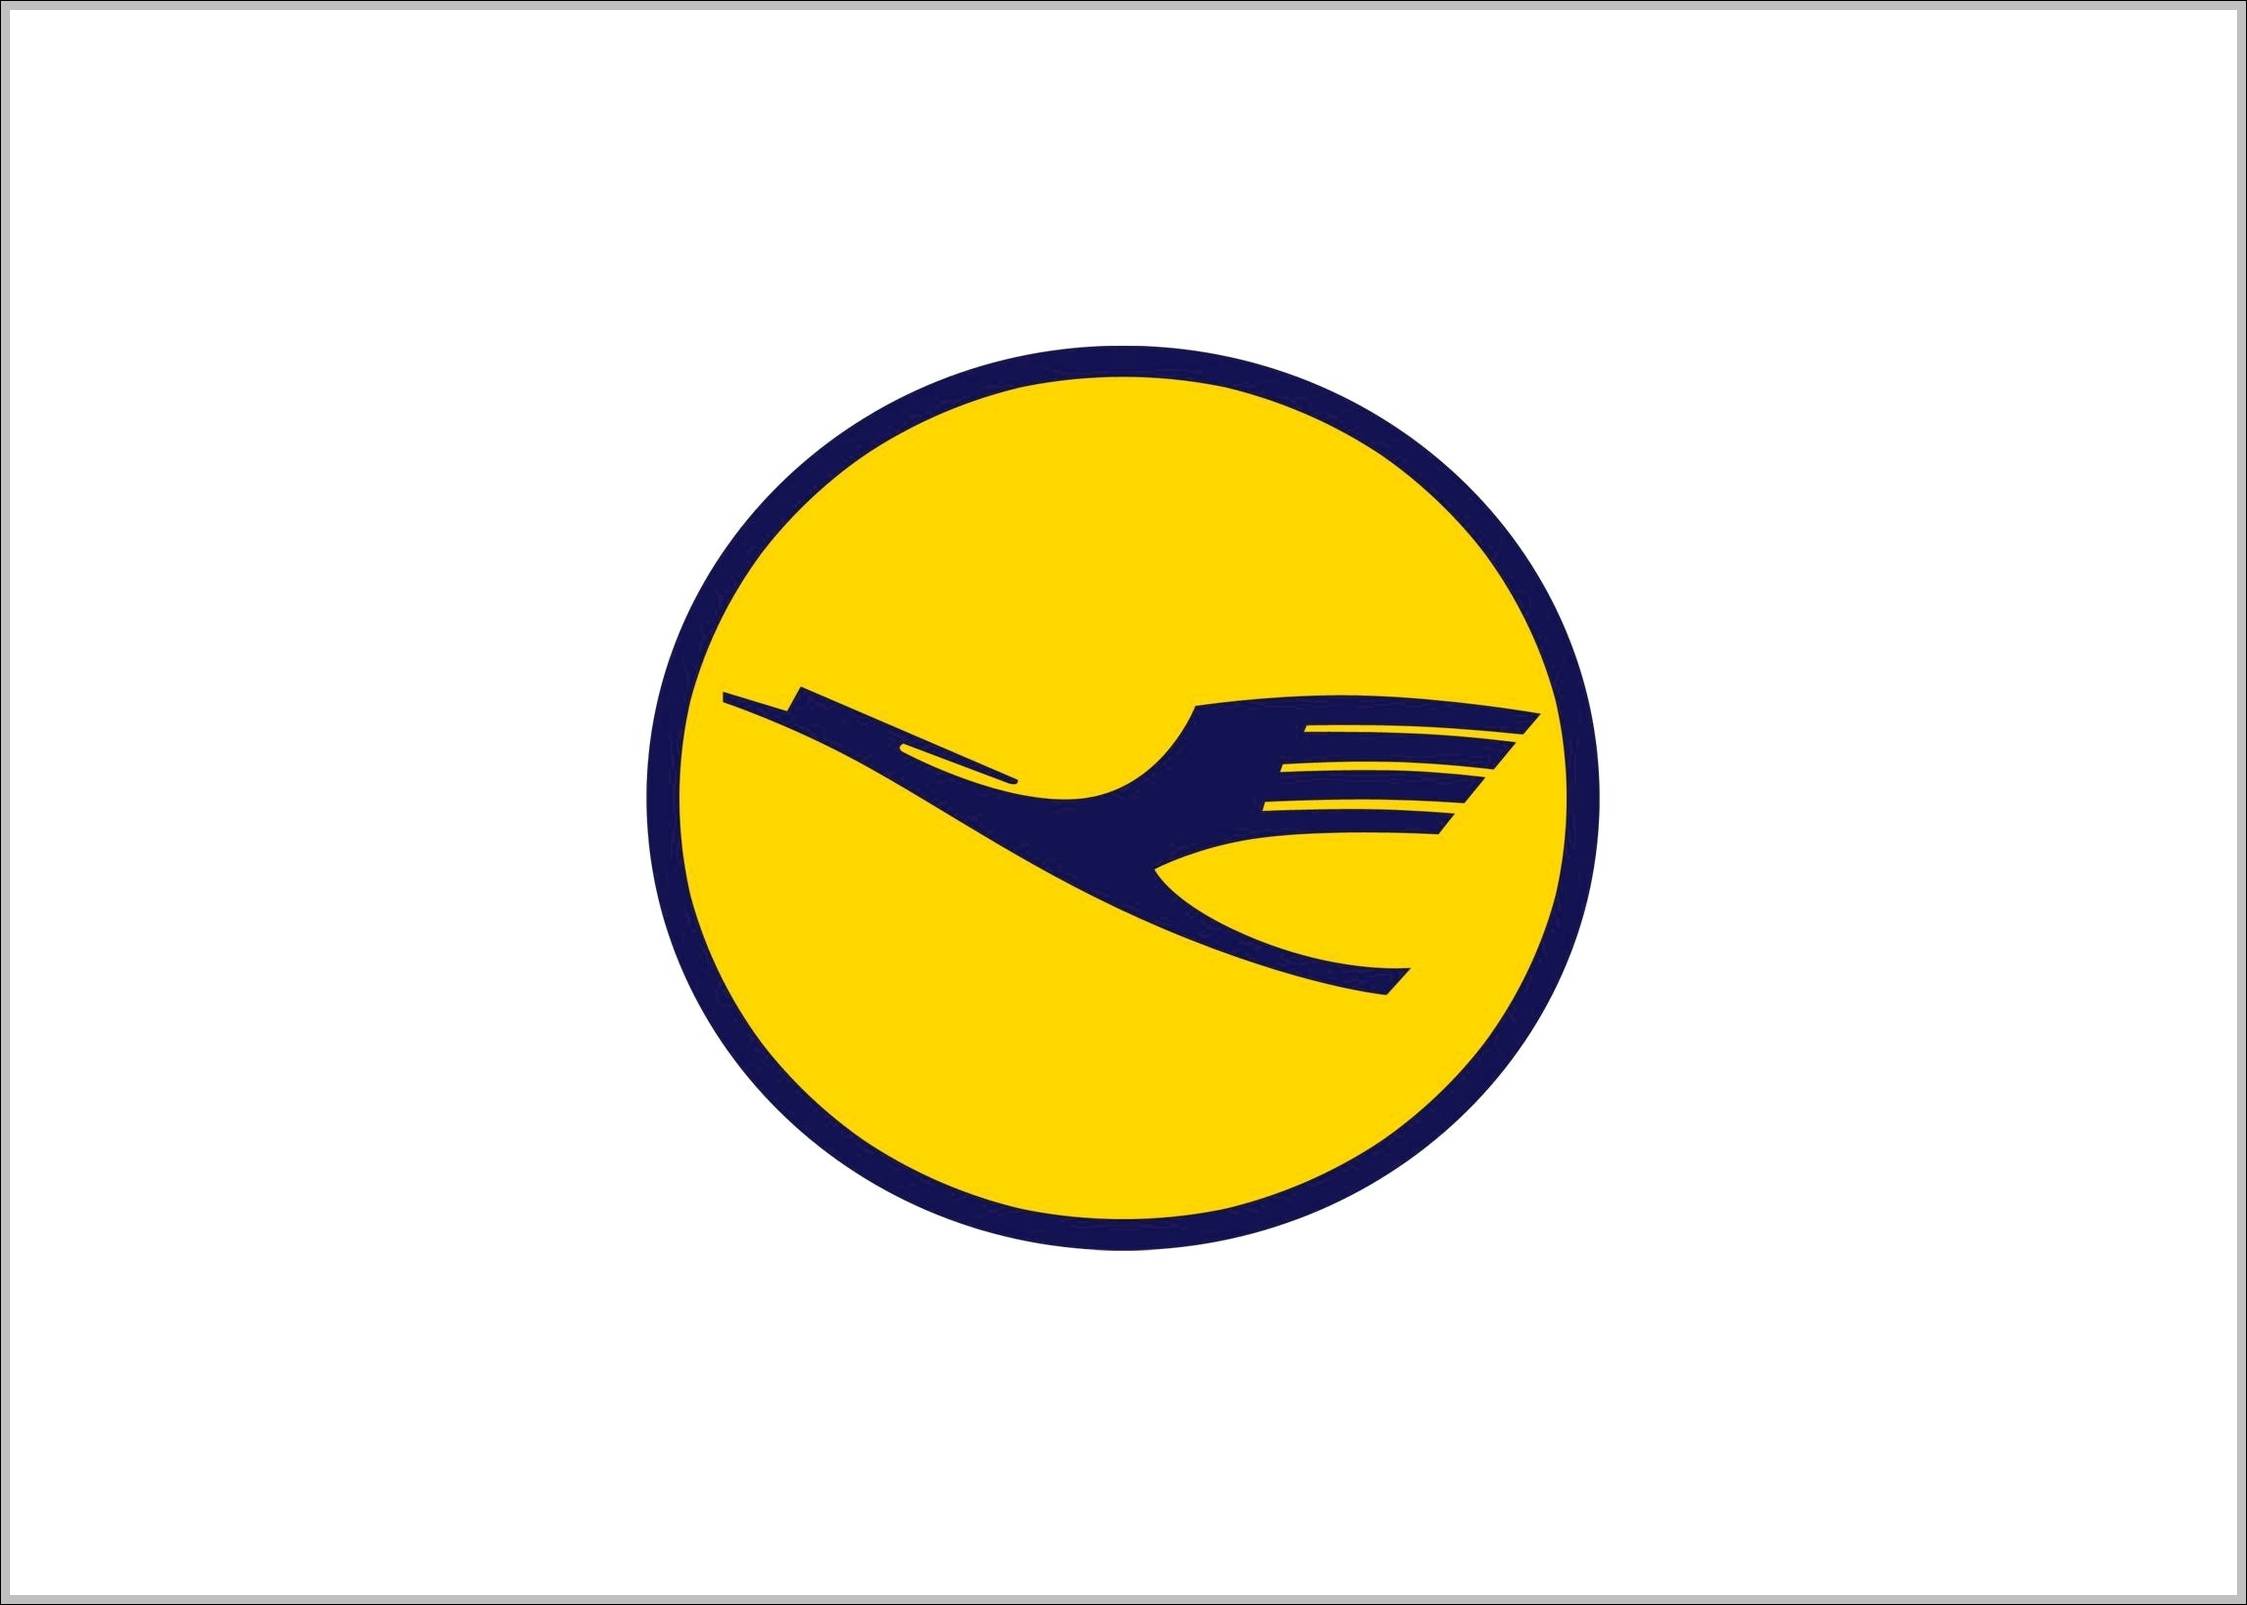 Lufthansa logo fly